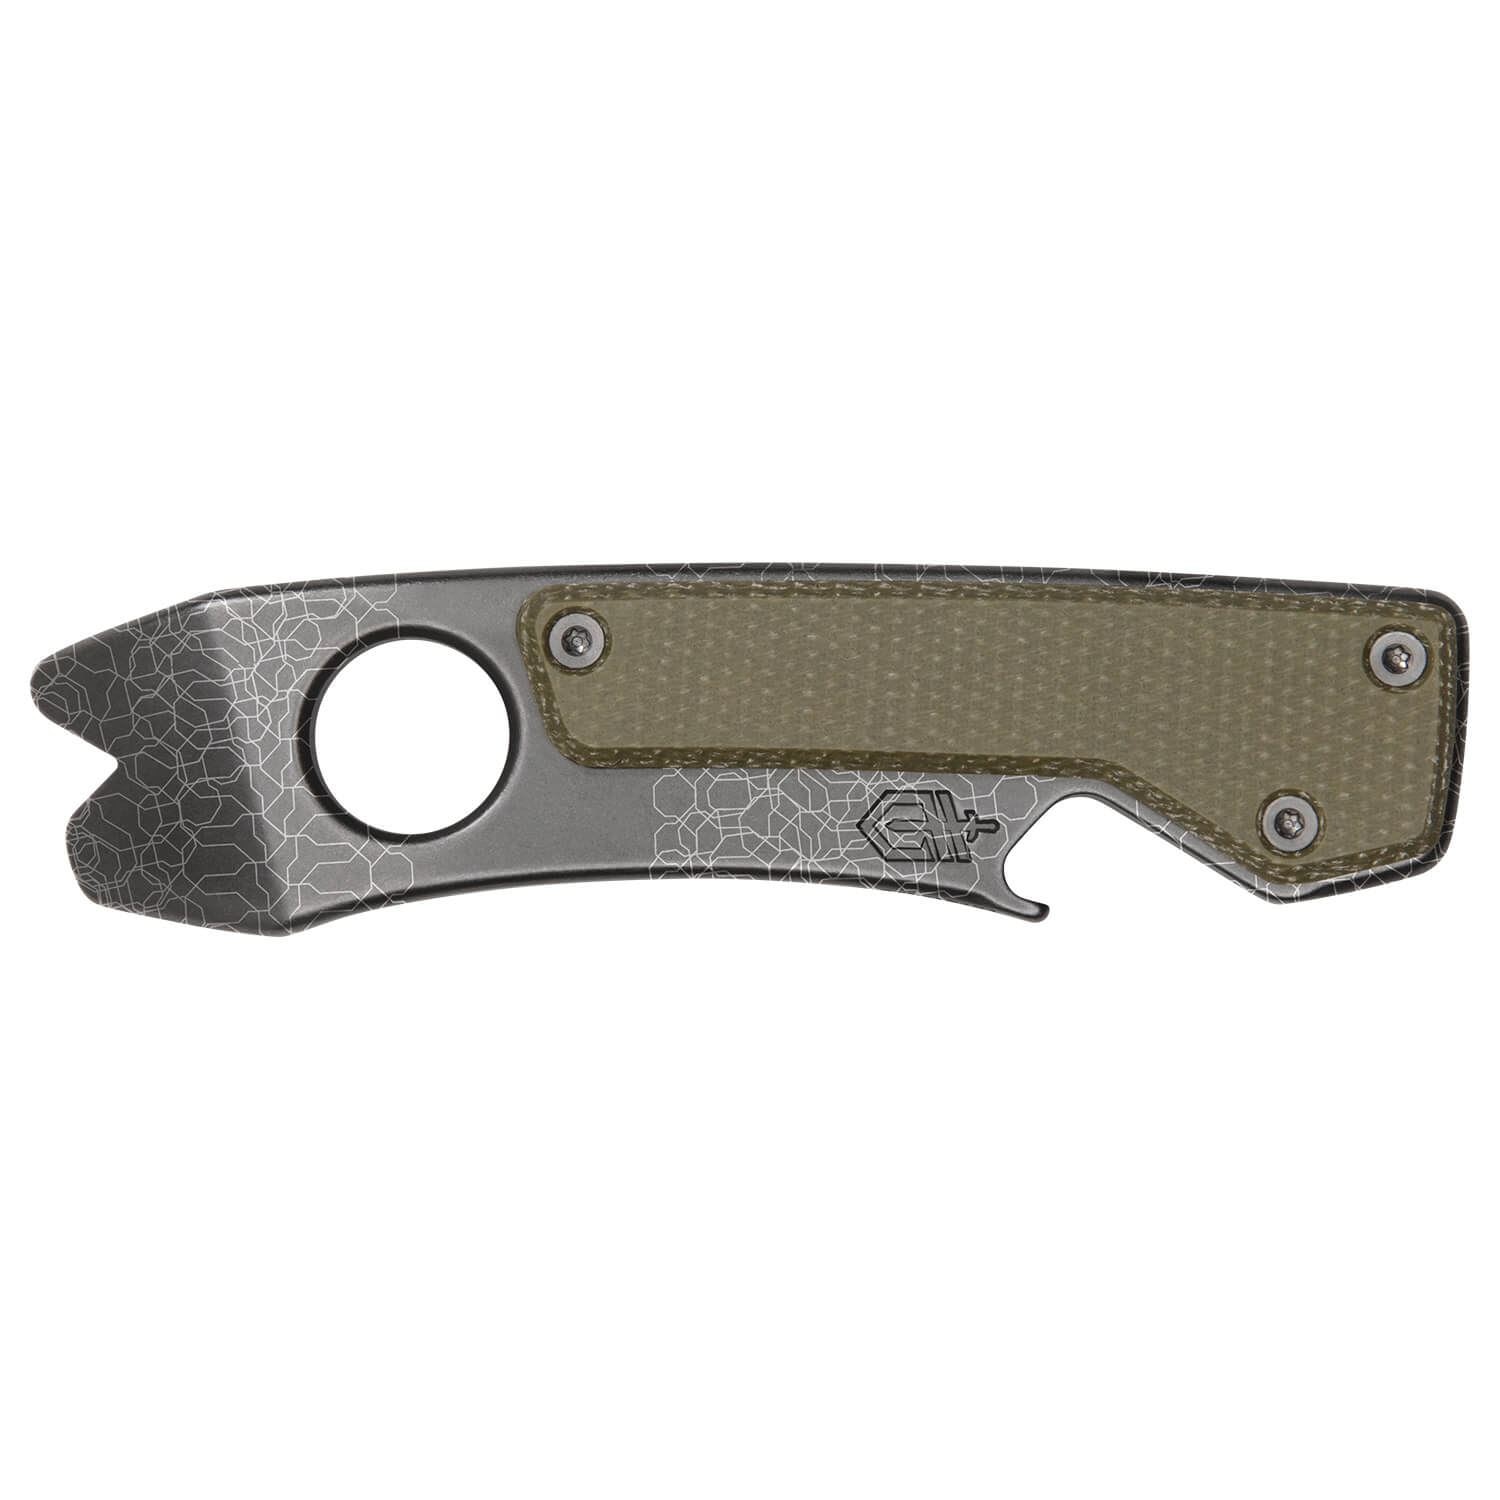 Gerber Prybrid-X Utility Knife Black/Green 31-003739 - Blade HQ